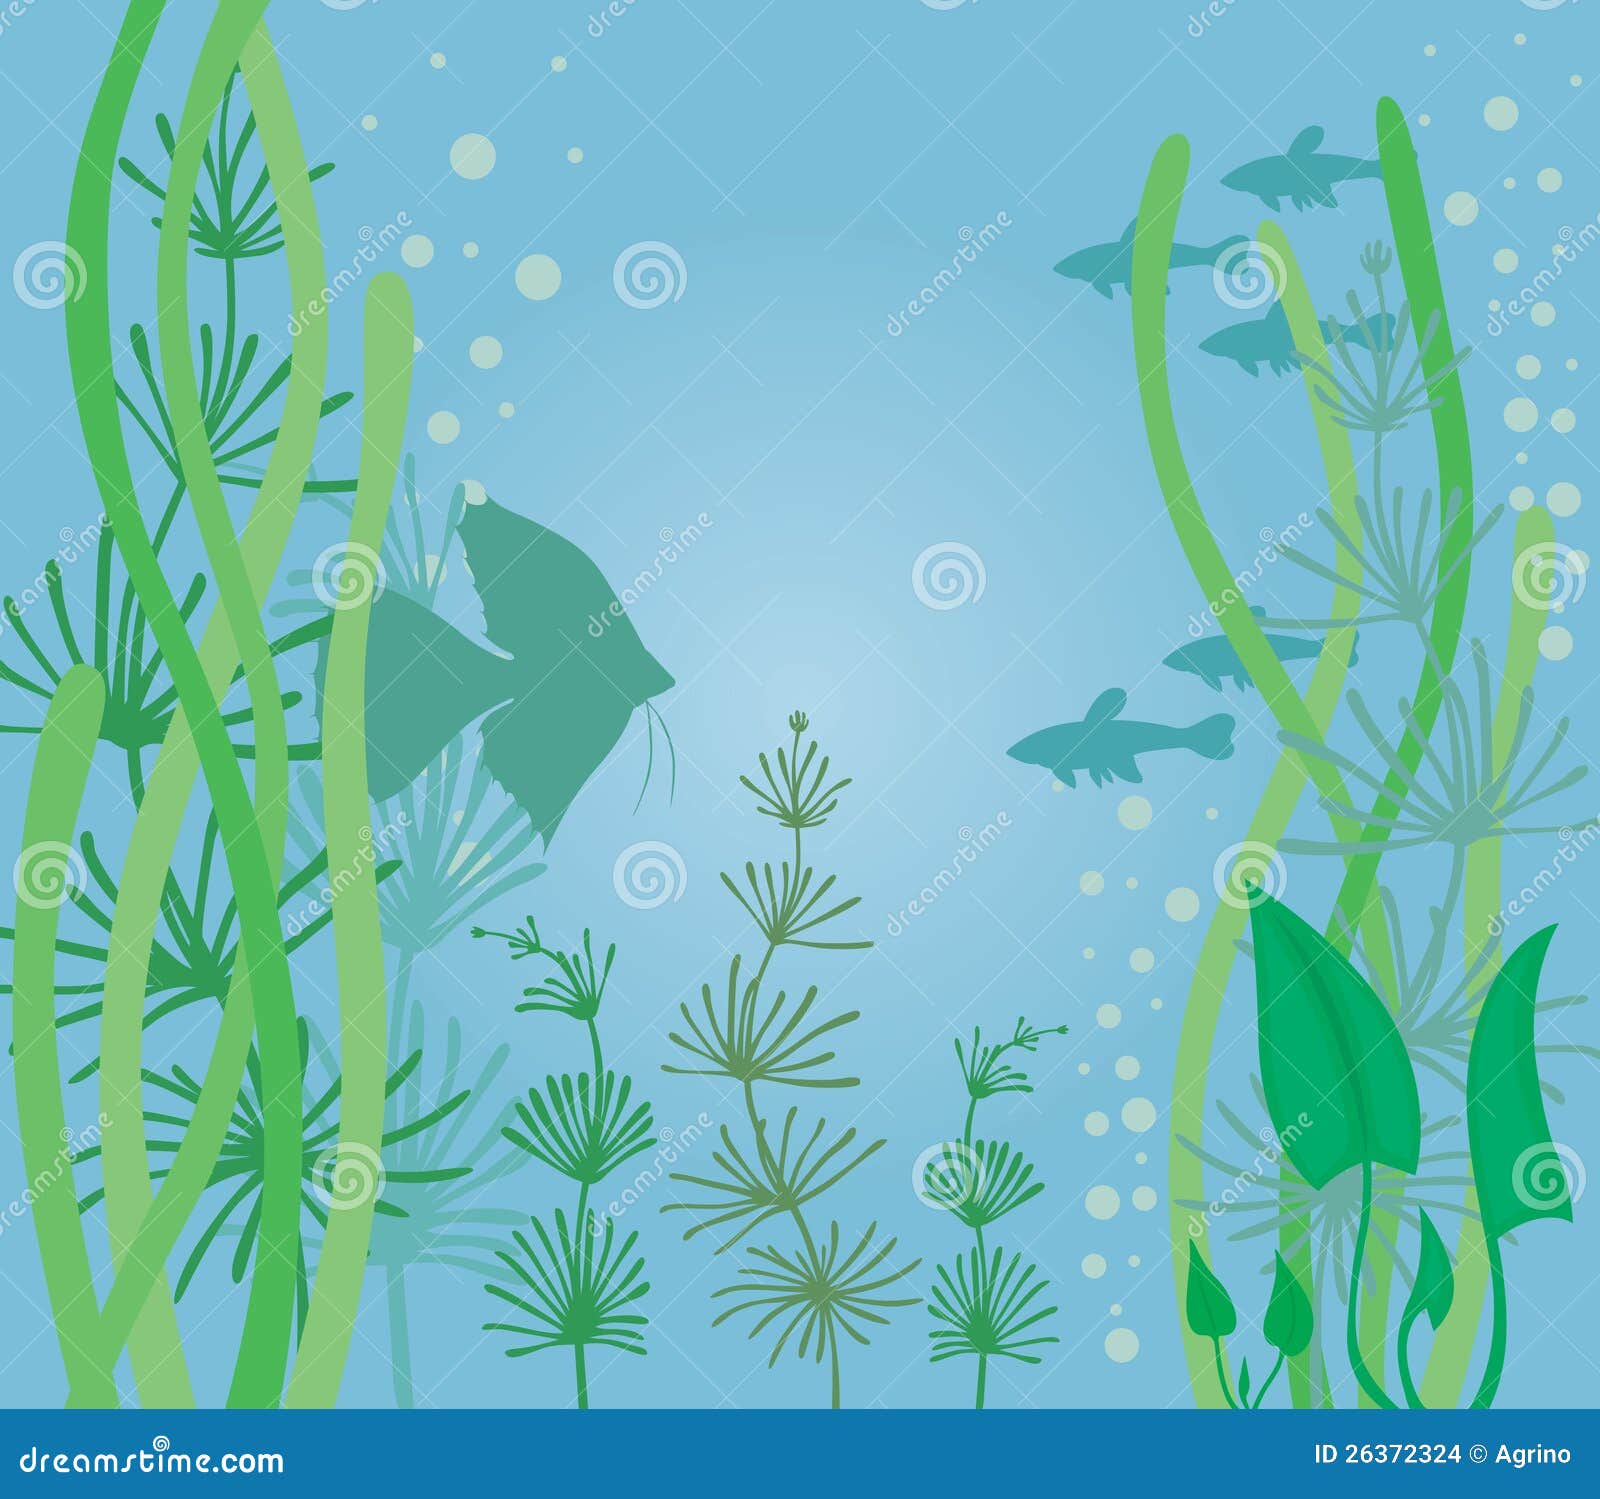 Aquarium with fish stock vector. Illustration of cryptocoryne - 26372324